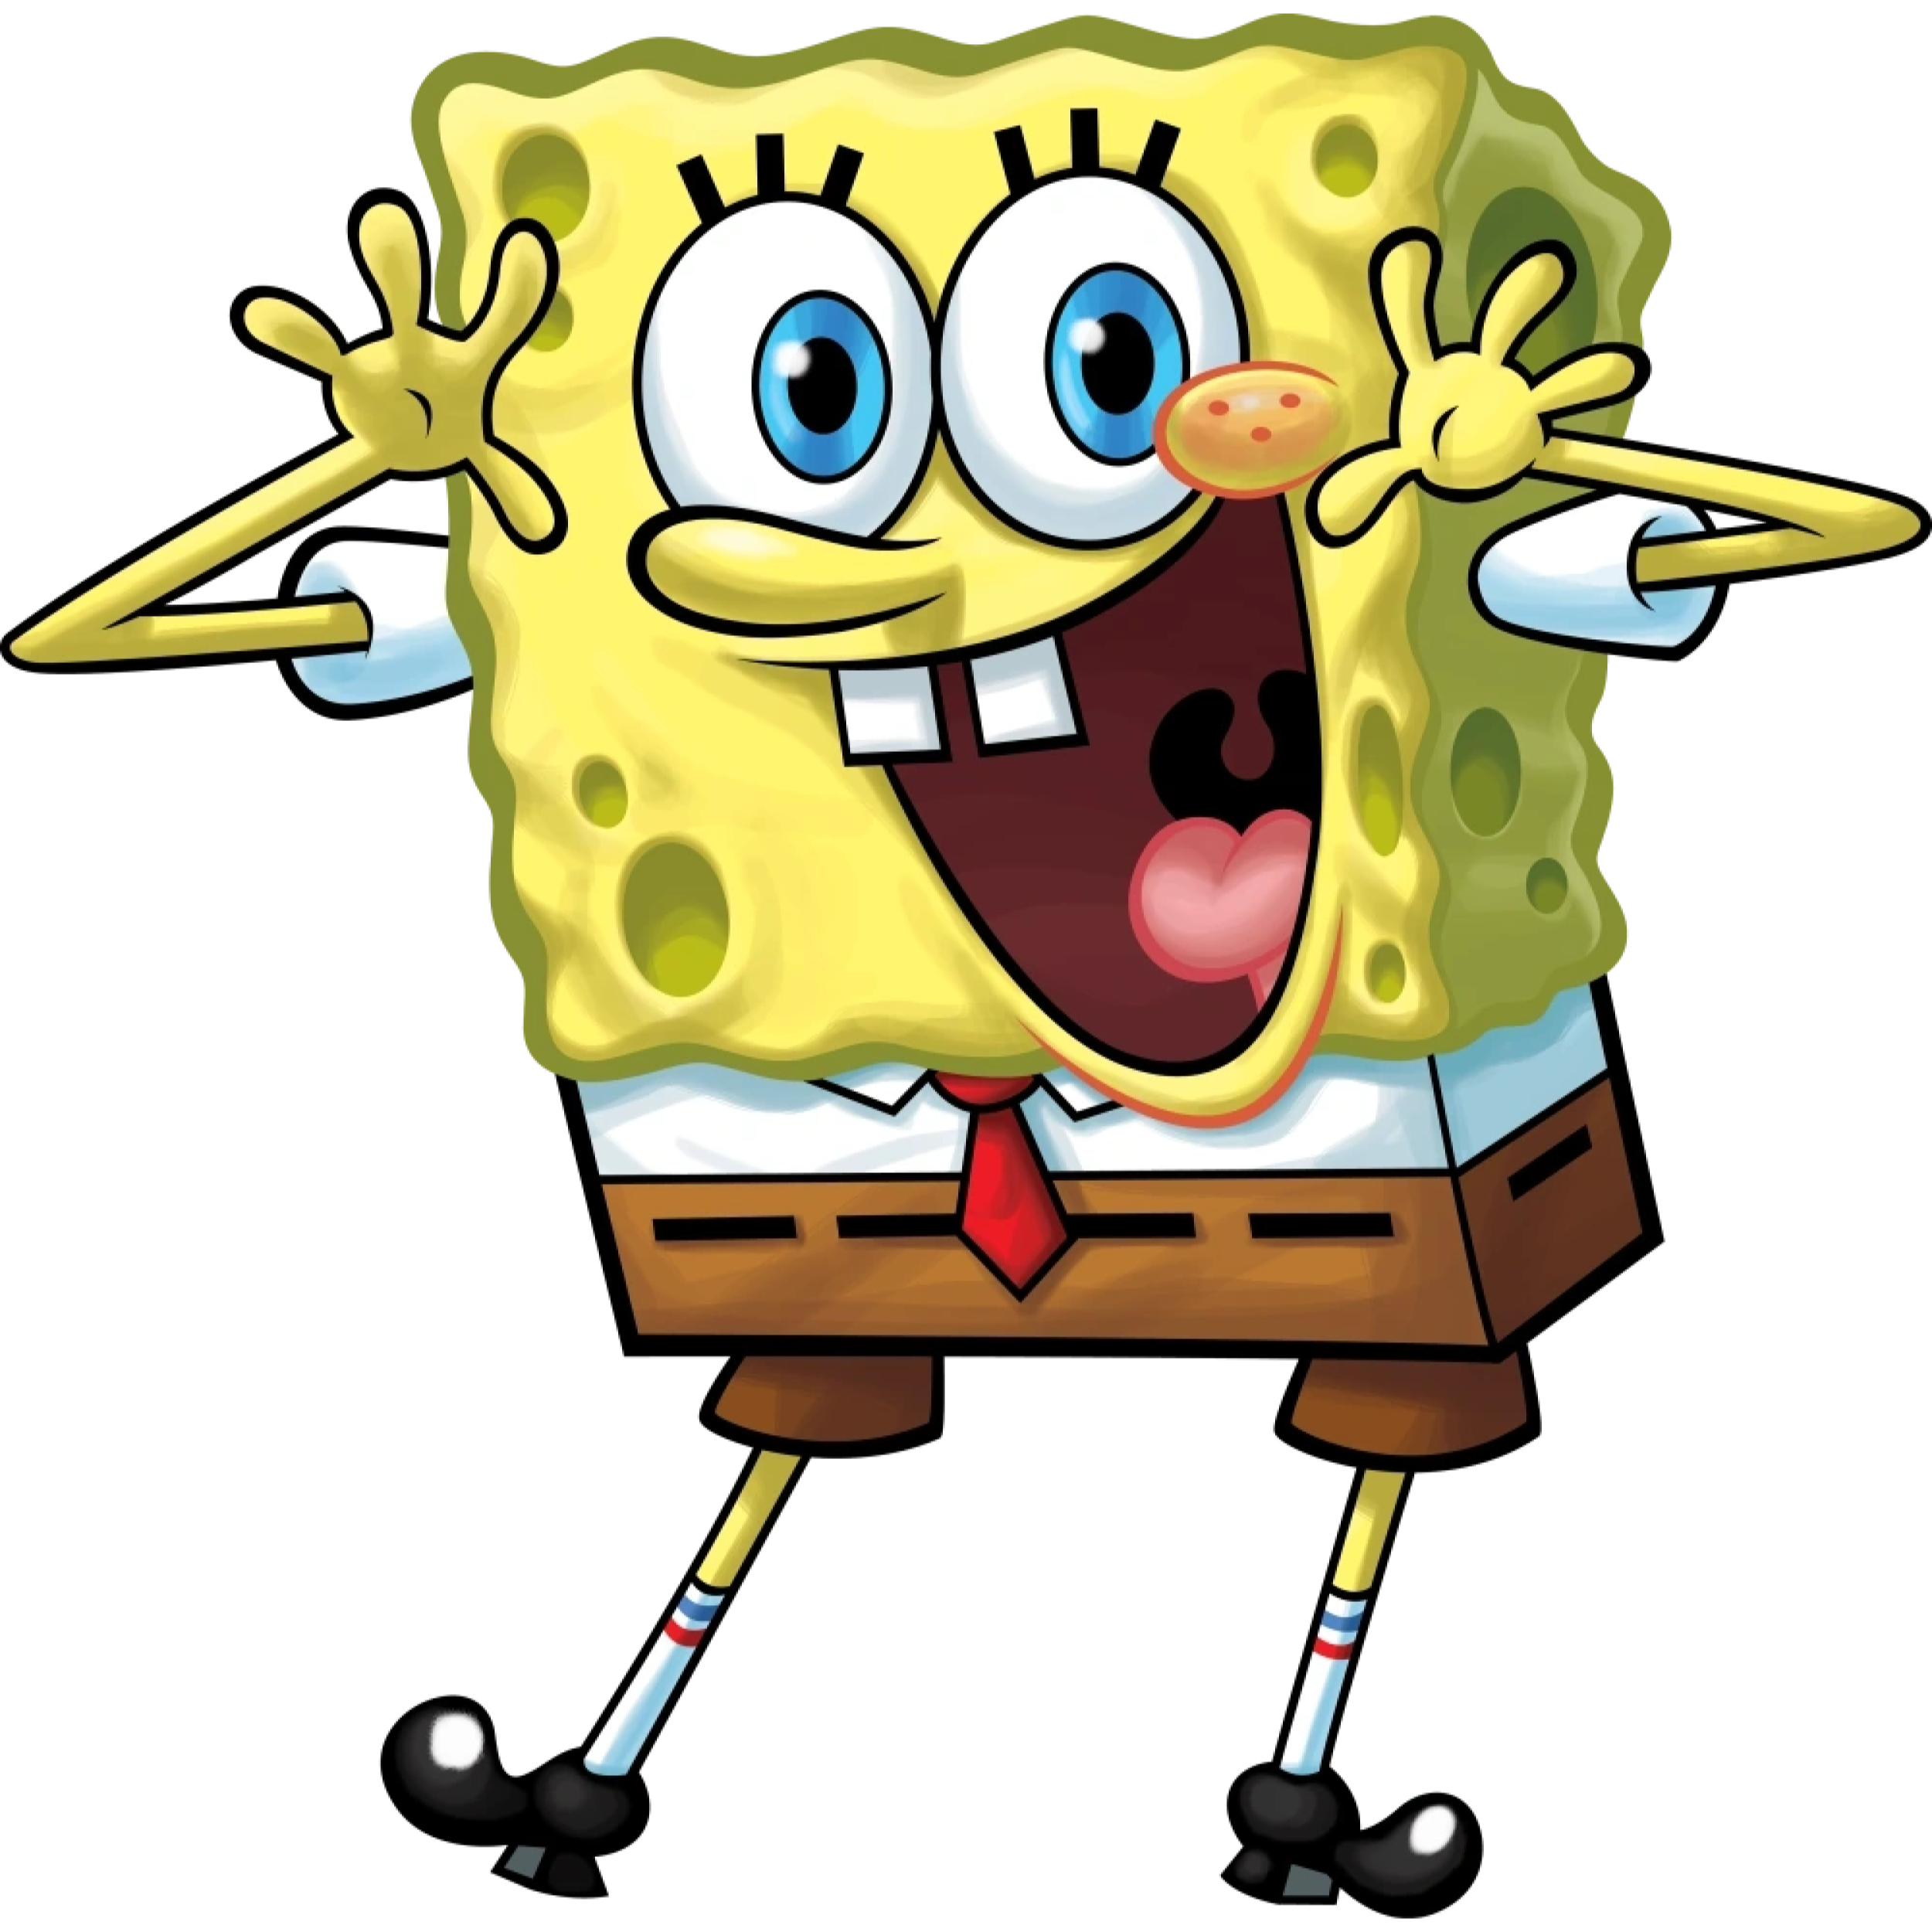 Spongebob squarepants character